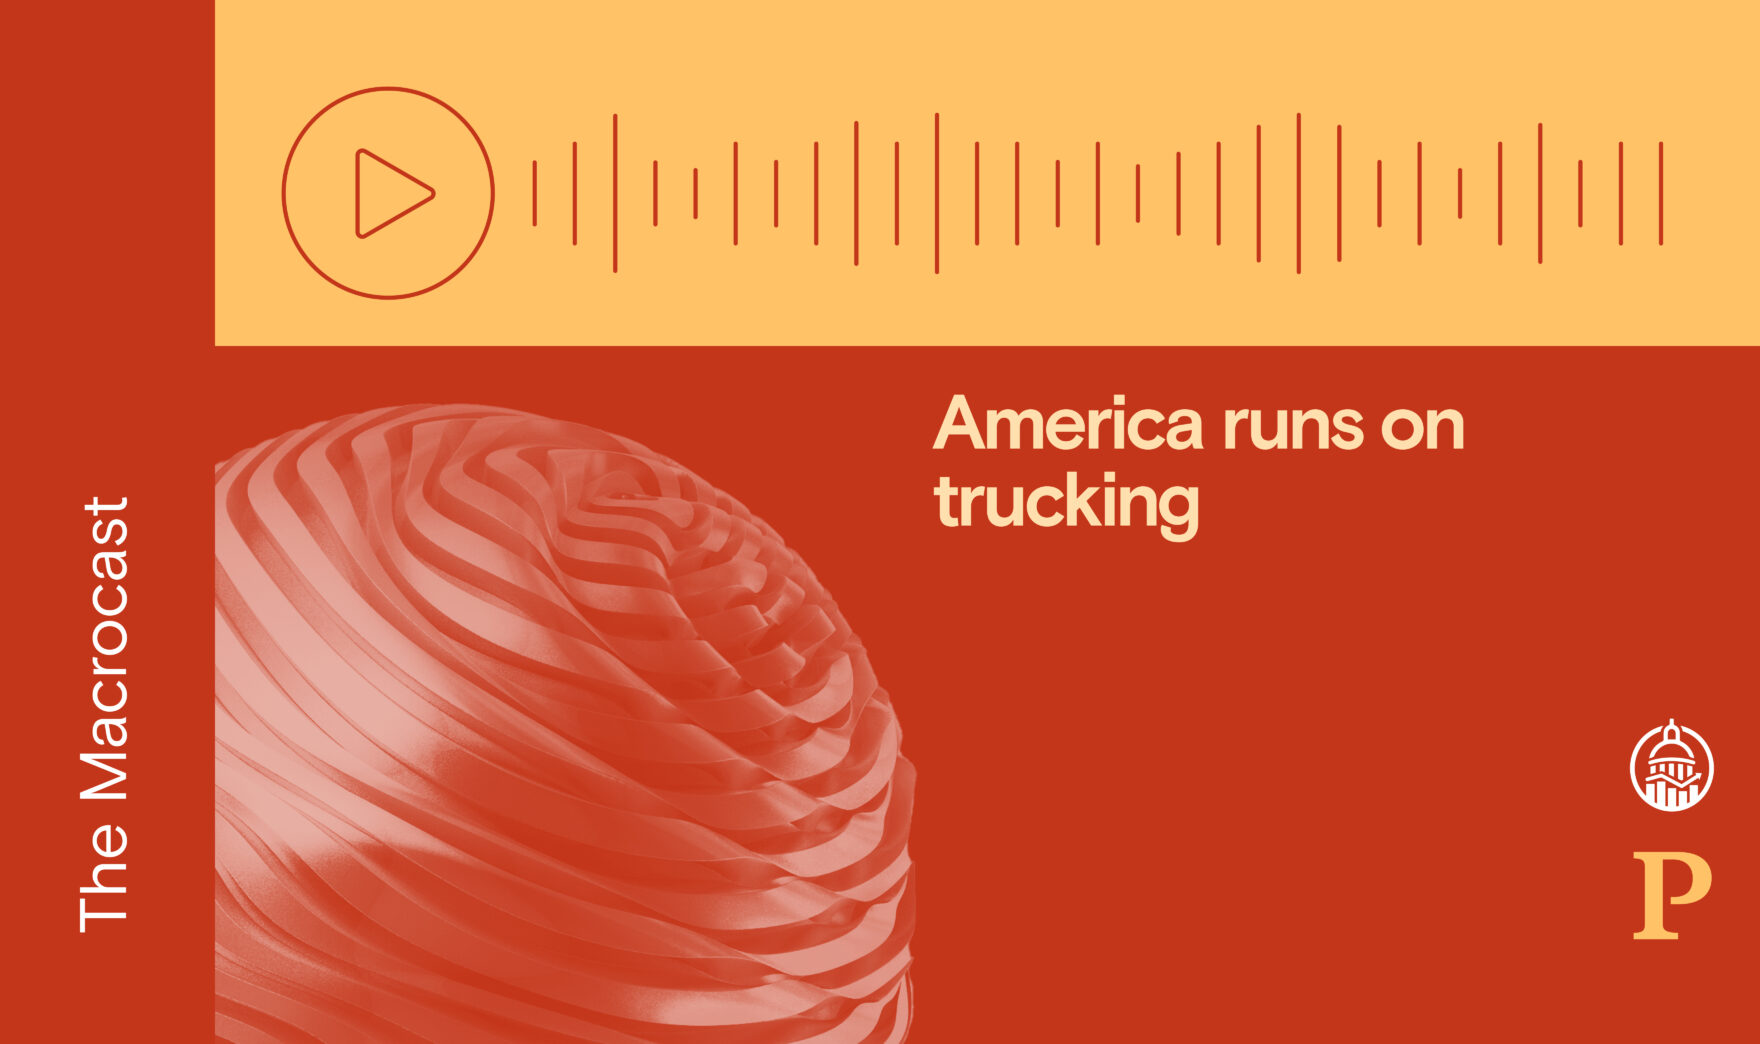 Macrocast: America runs on trucking